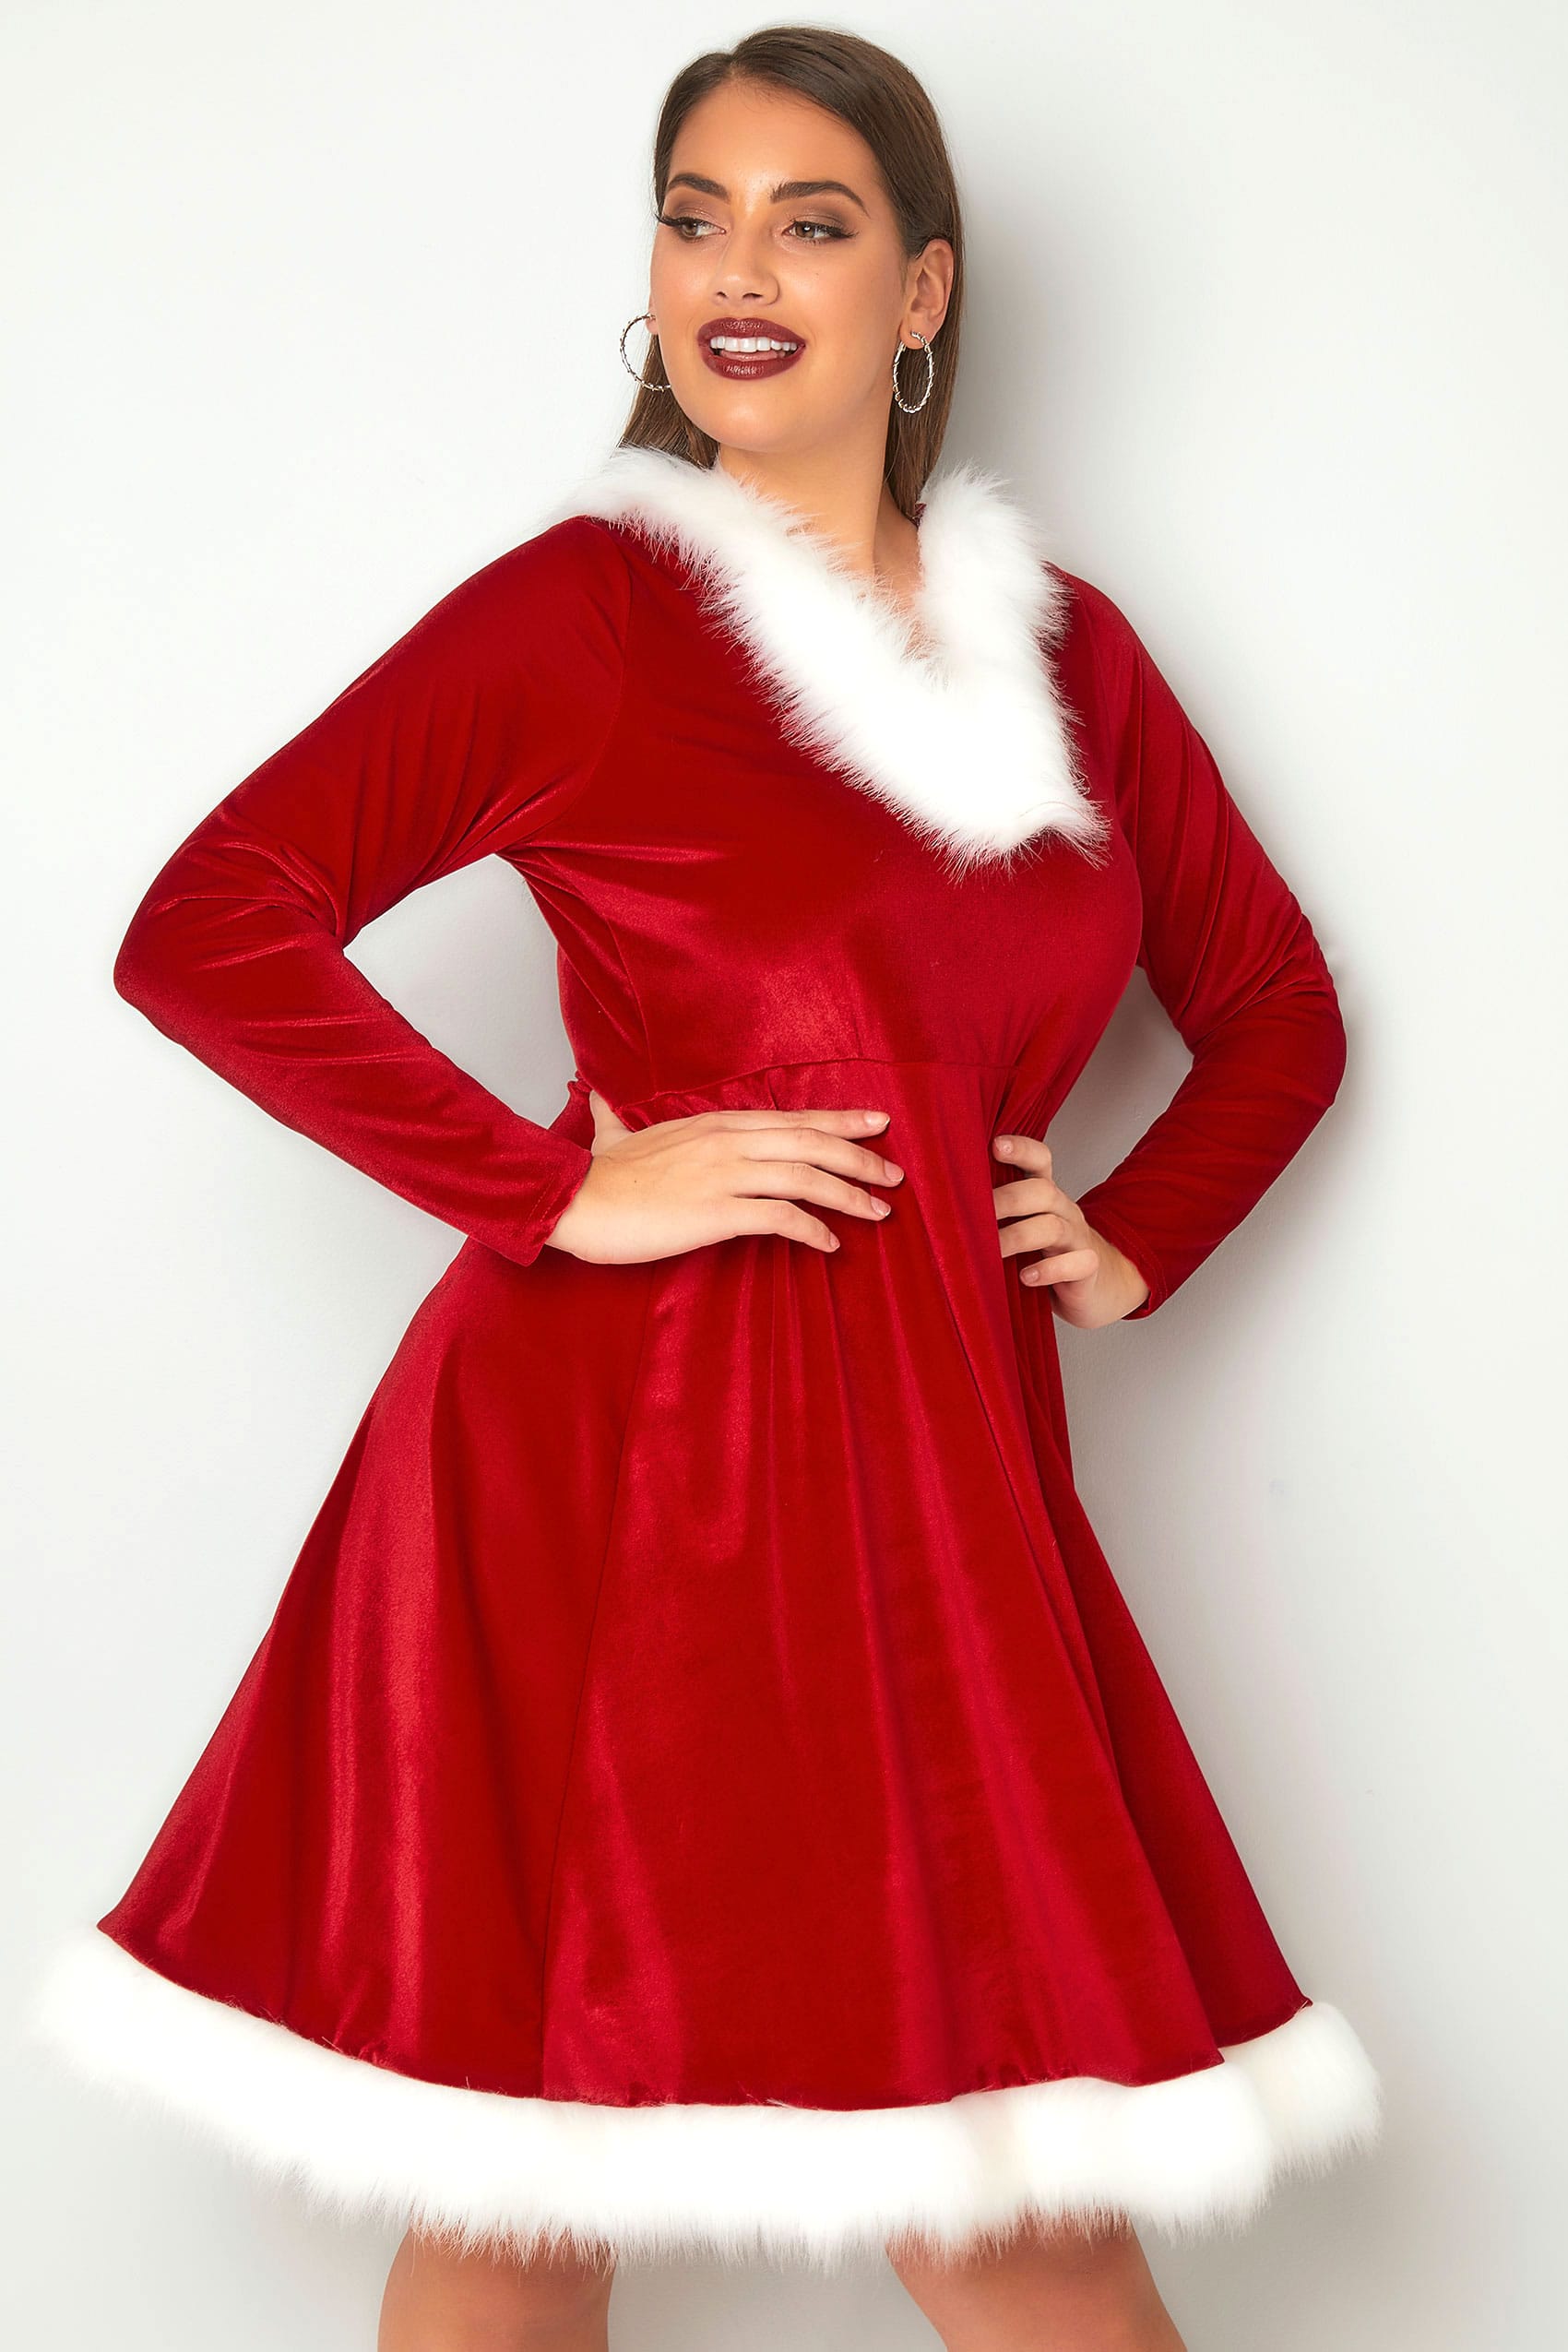 Images Of Santa Dress : Red velvet suits, boots, vests, festive shirts ...